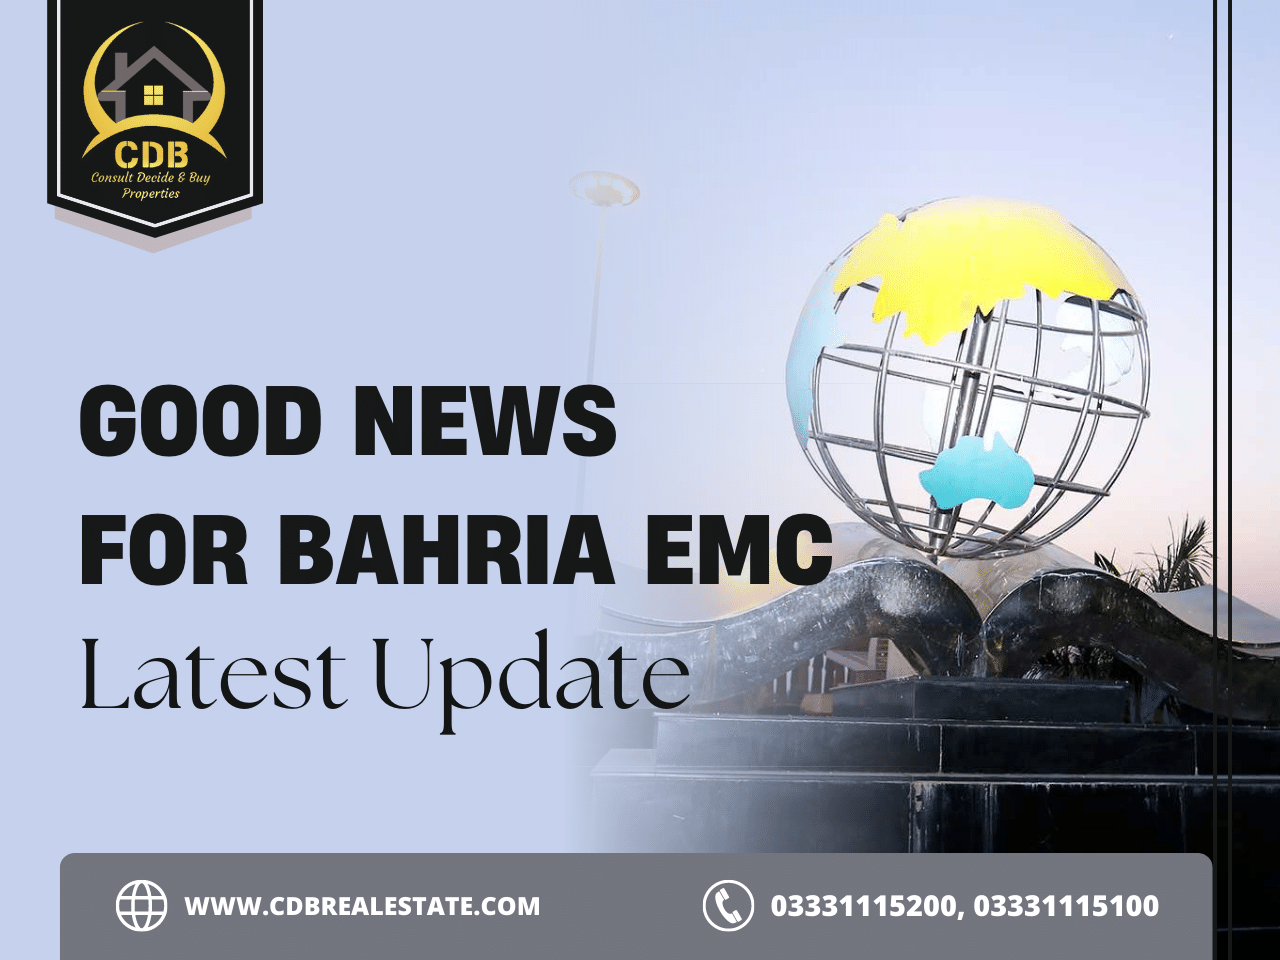 Good News for Bahria EMC - Latest Update